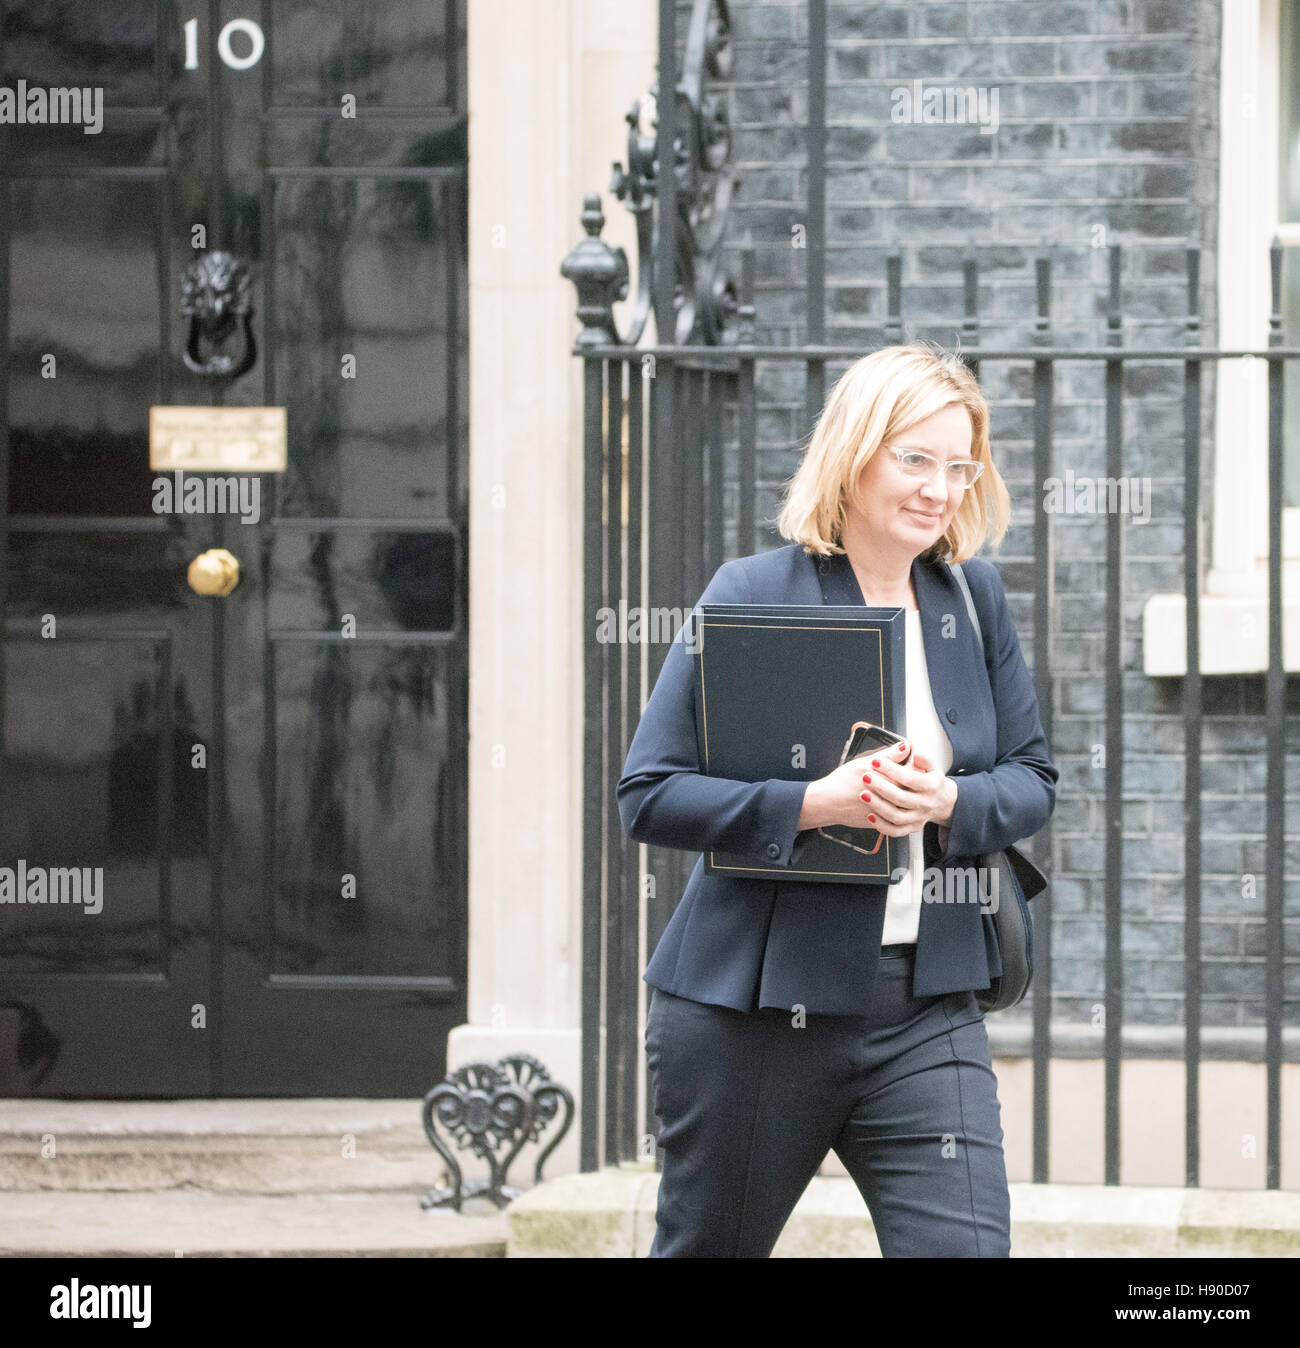 Amber Rudd, Home Secretary, Leaves 10 Downing Street, Credit: Ian Davidson/Alamy Live News Stock Photo